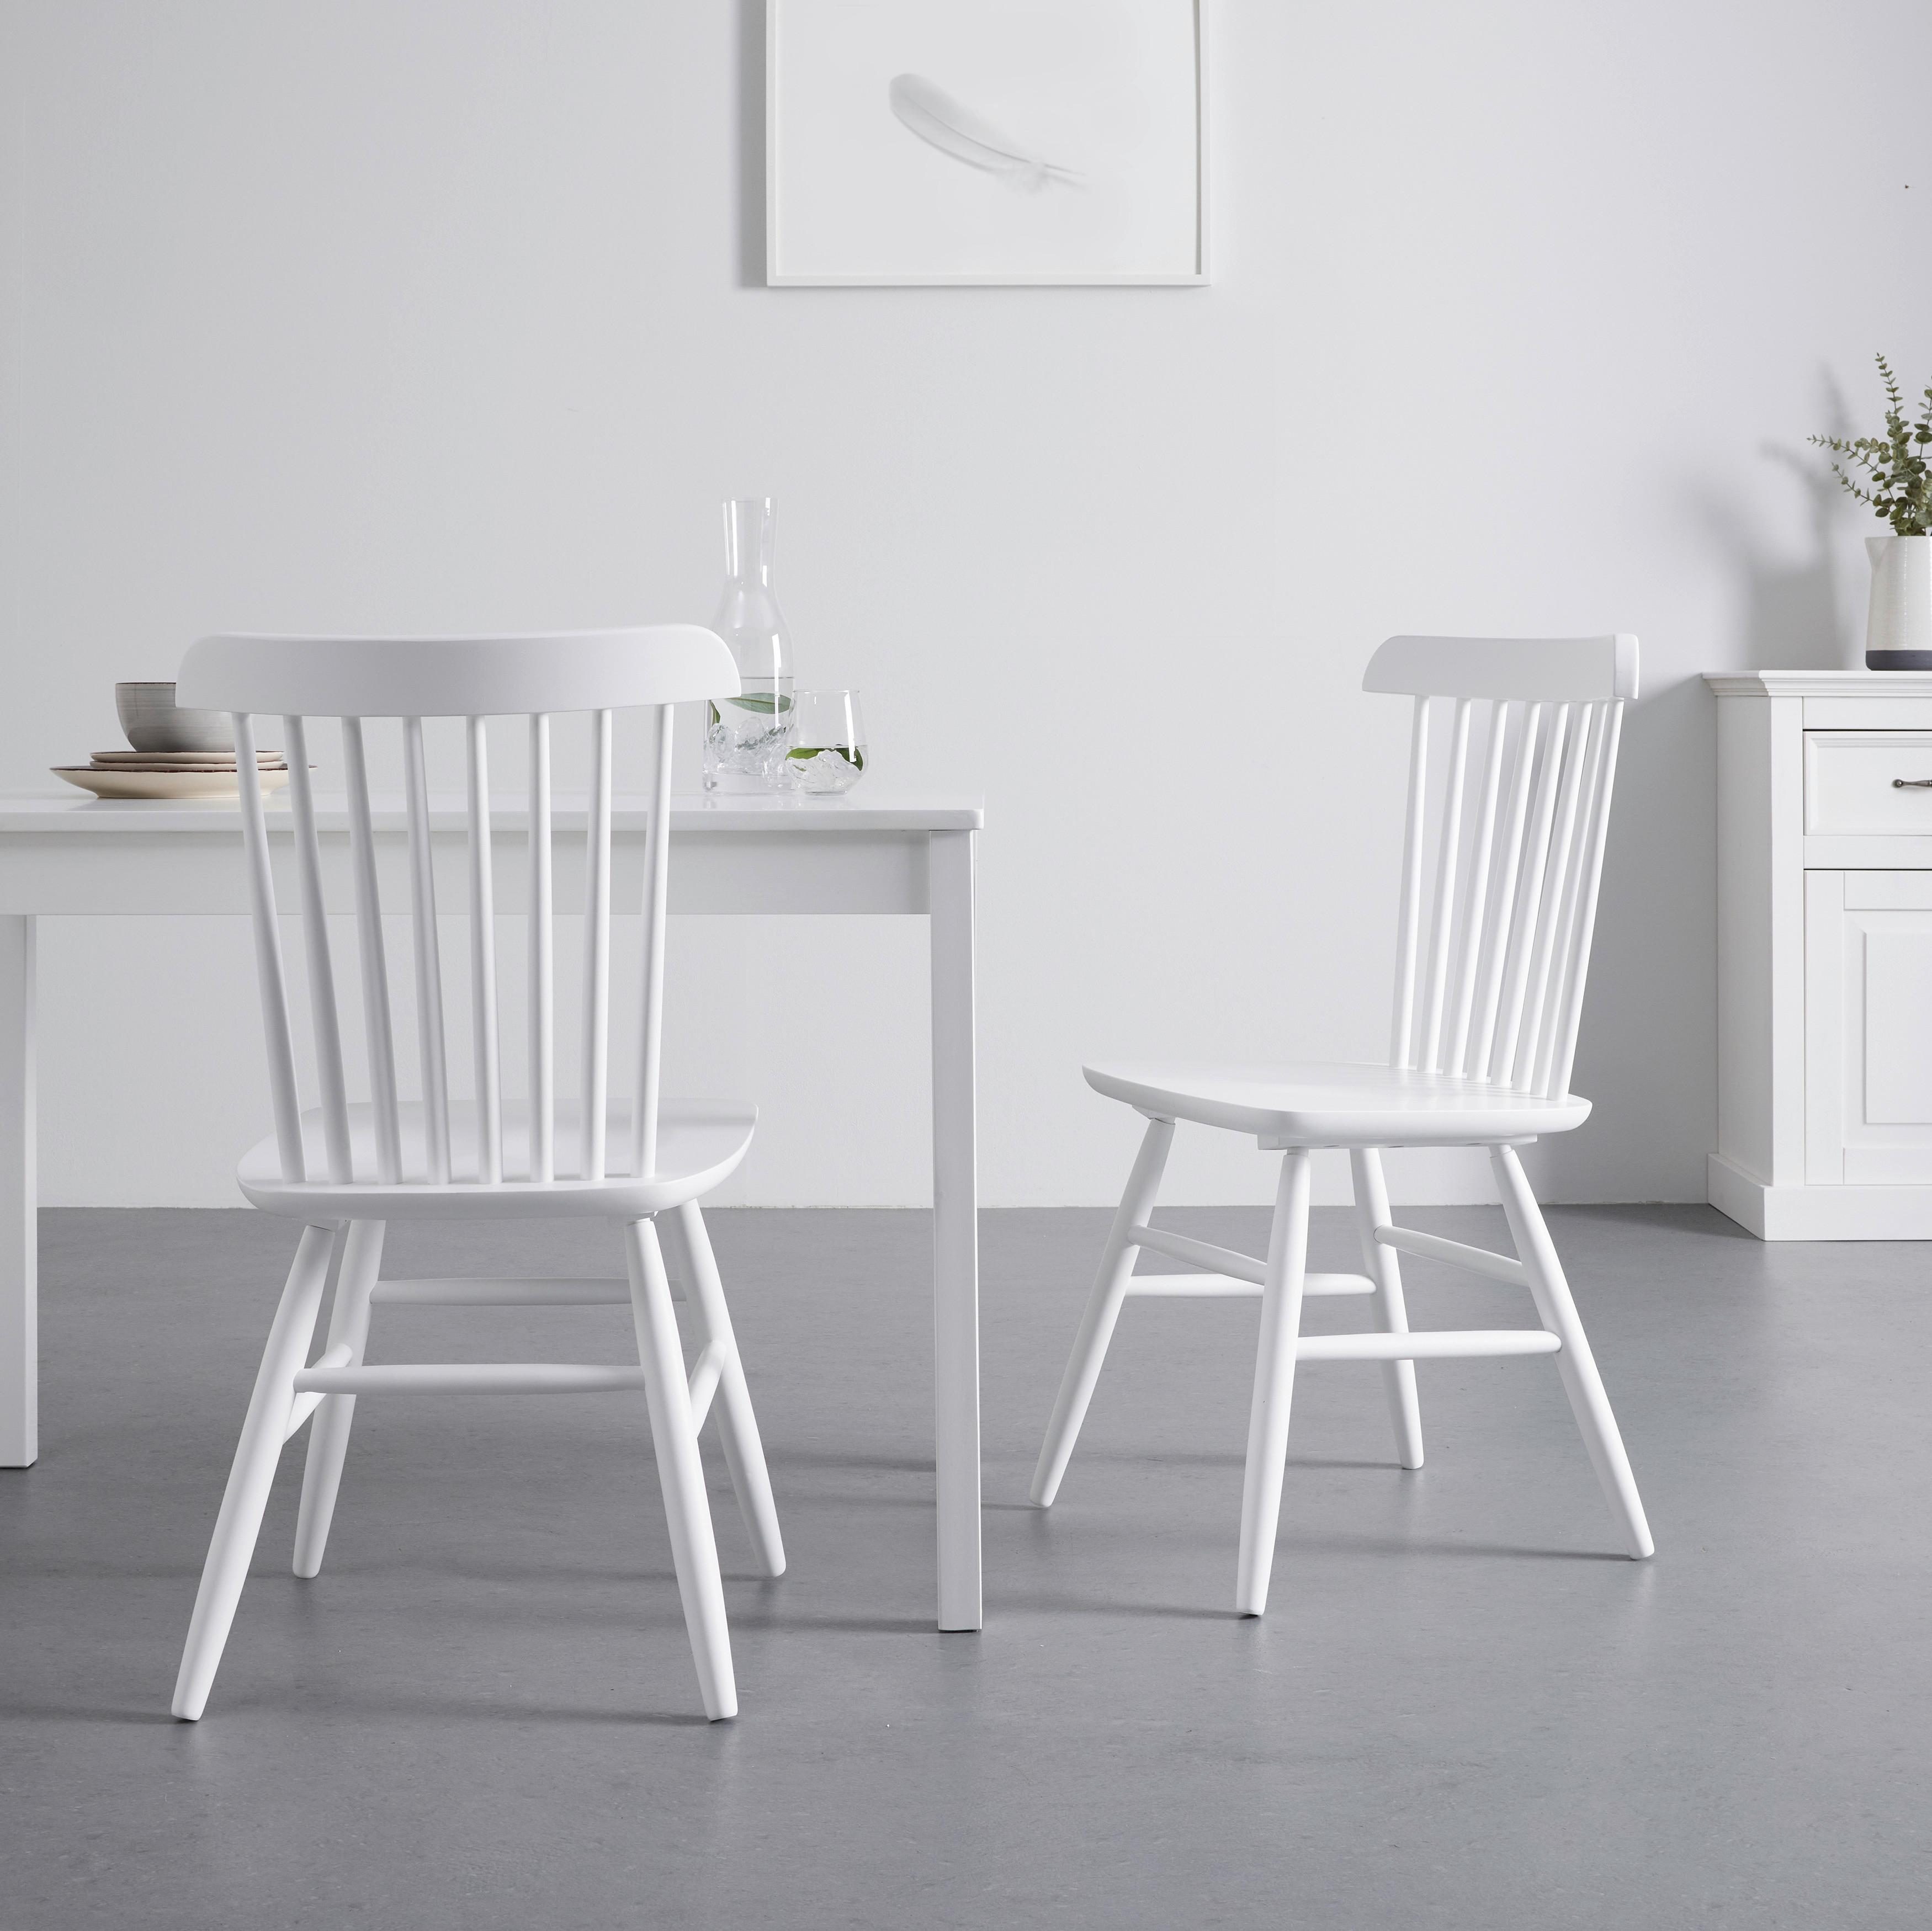 Stuhl-Set "Pedro". 2-er Set, weiß, aus Buche, massiv - Weiß, MODERN, Holz (48/89/52cm) - Bessagi Home